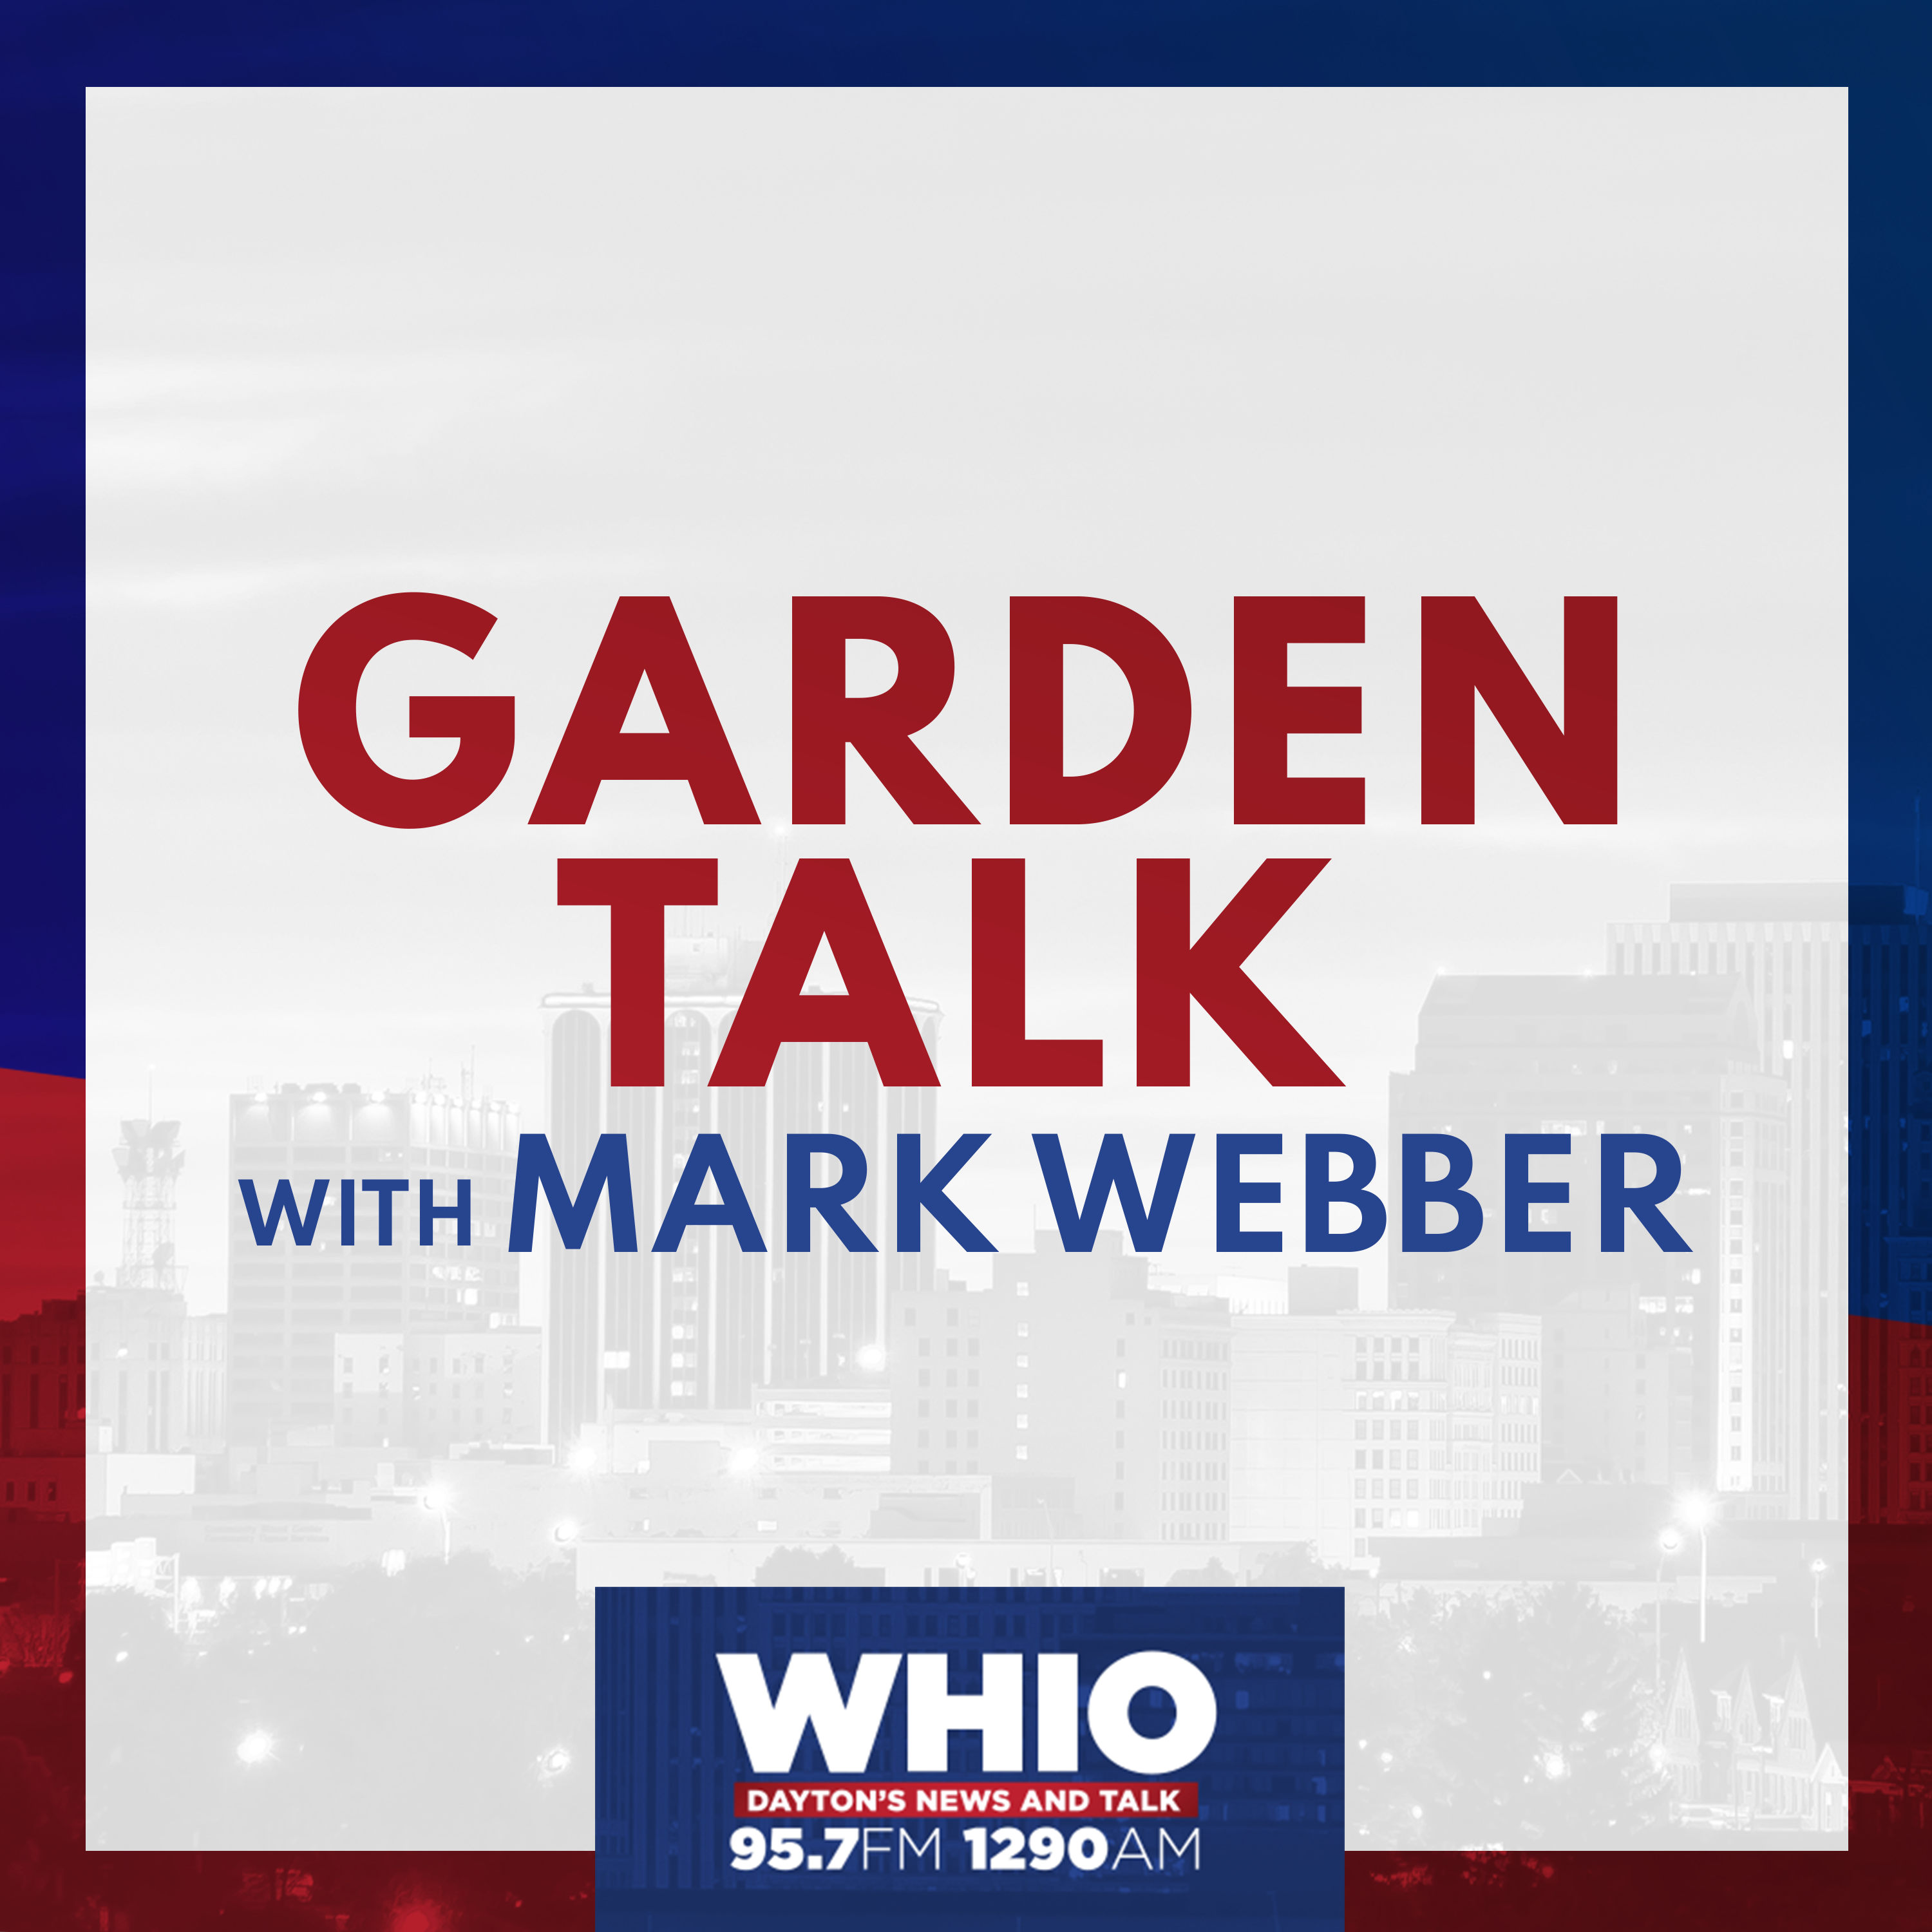 Garden Talk with Mark Webber